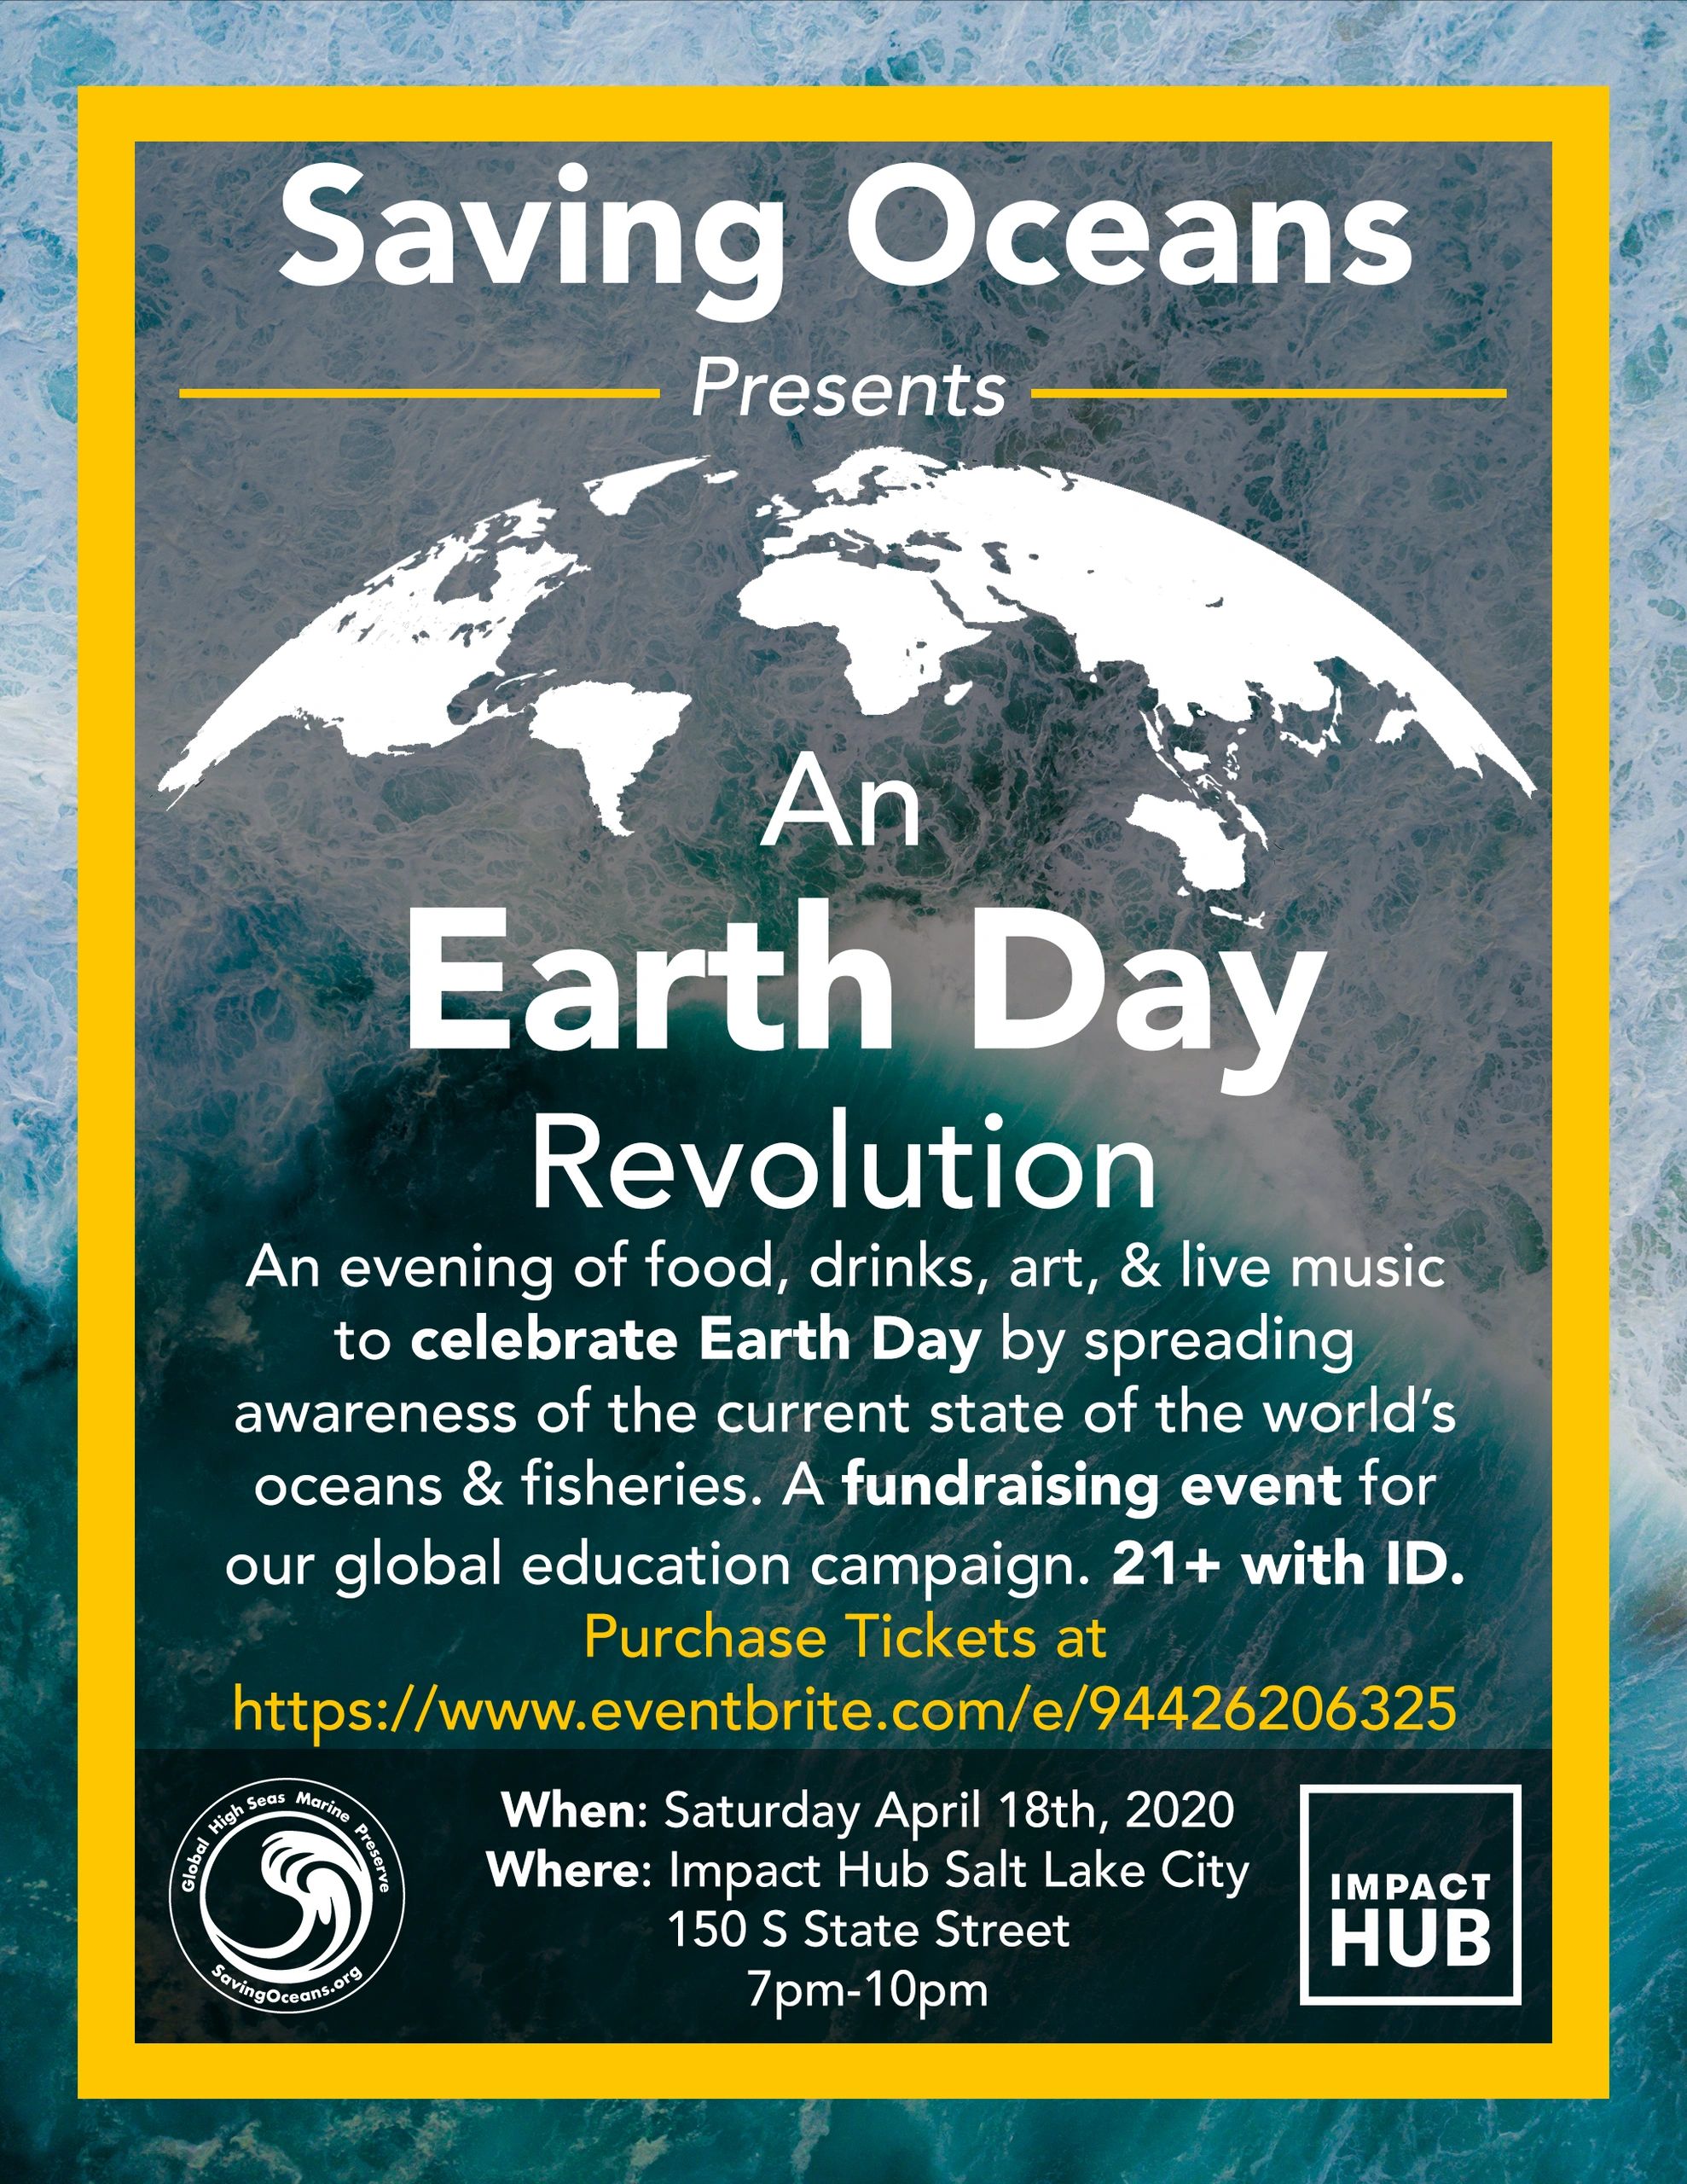 An Earth Day Revolution event flyer for Earth Day 2020 in Salt Lake City Utah for Saving Oceans.